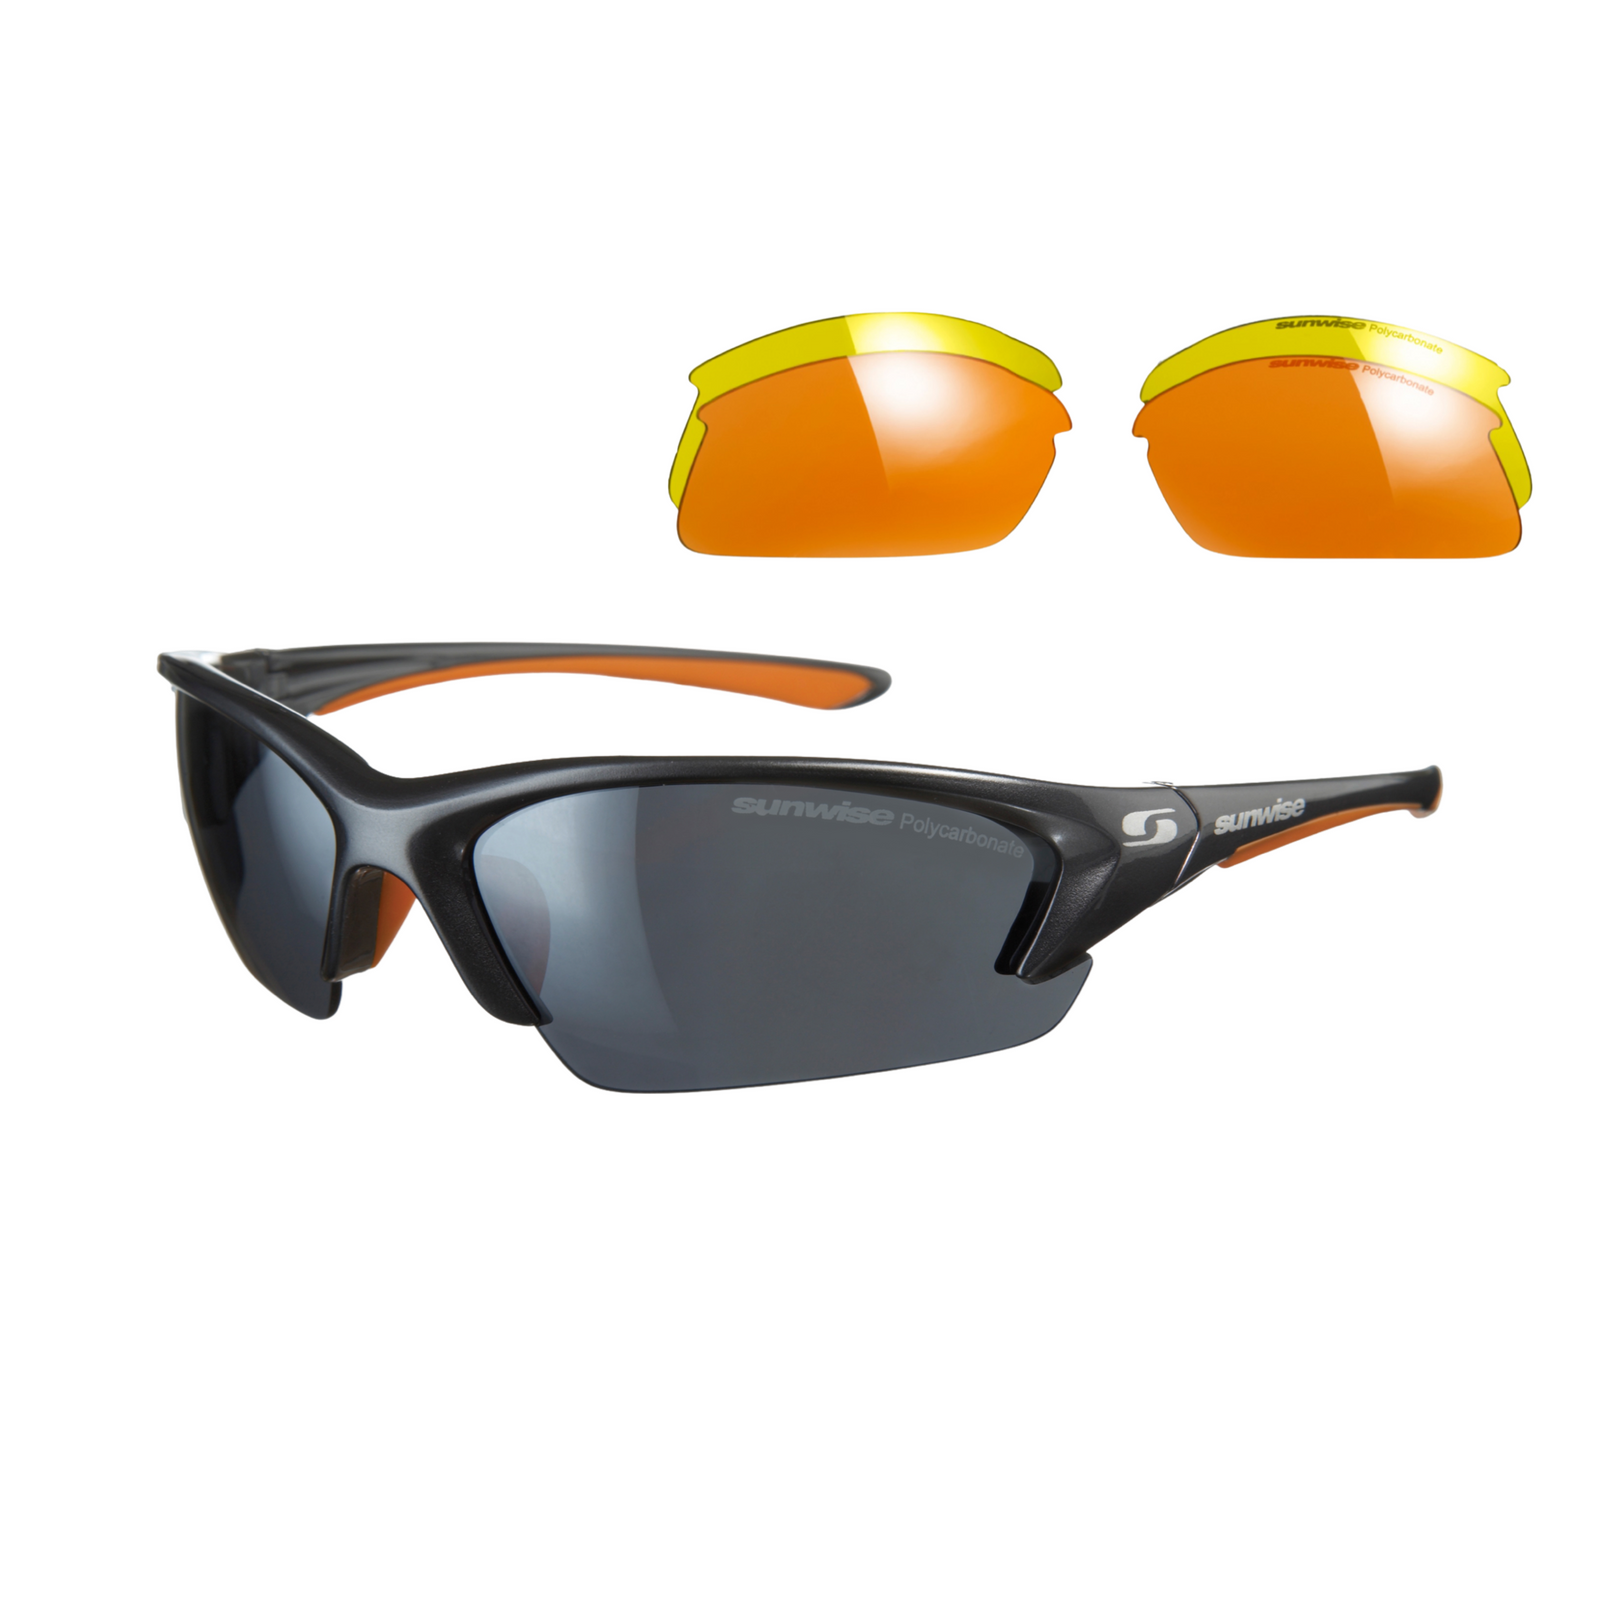 Equinox Sports Sunglasses